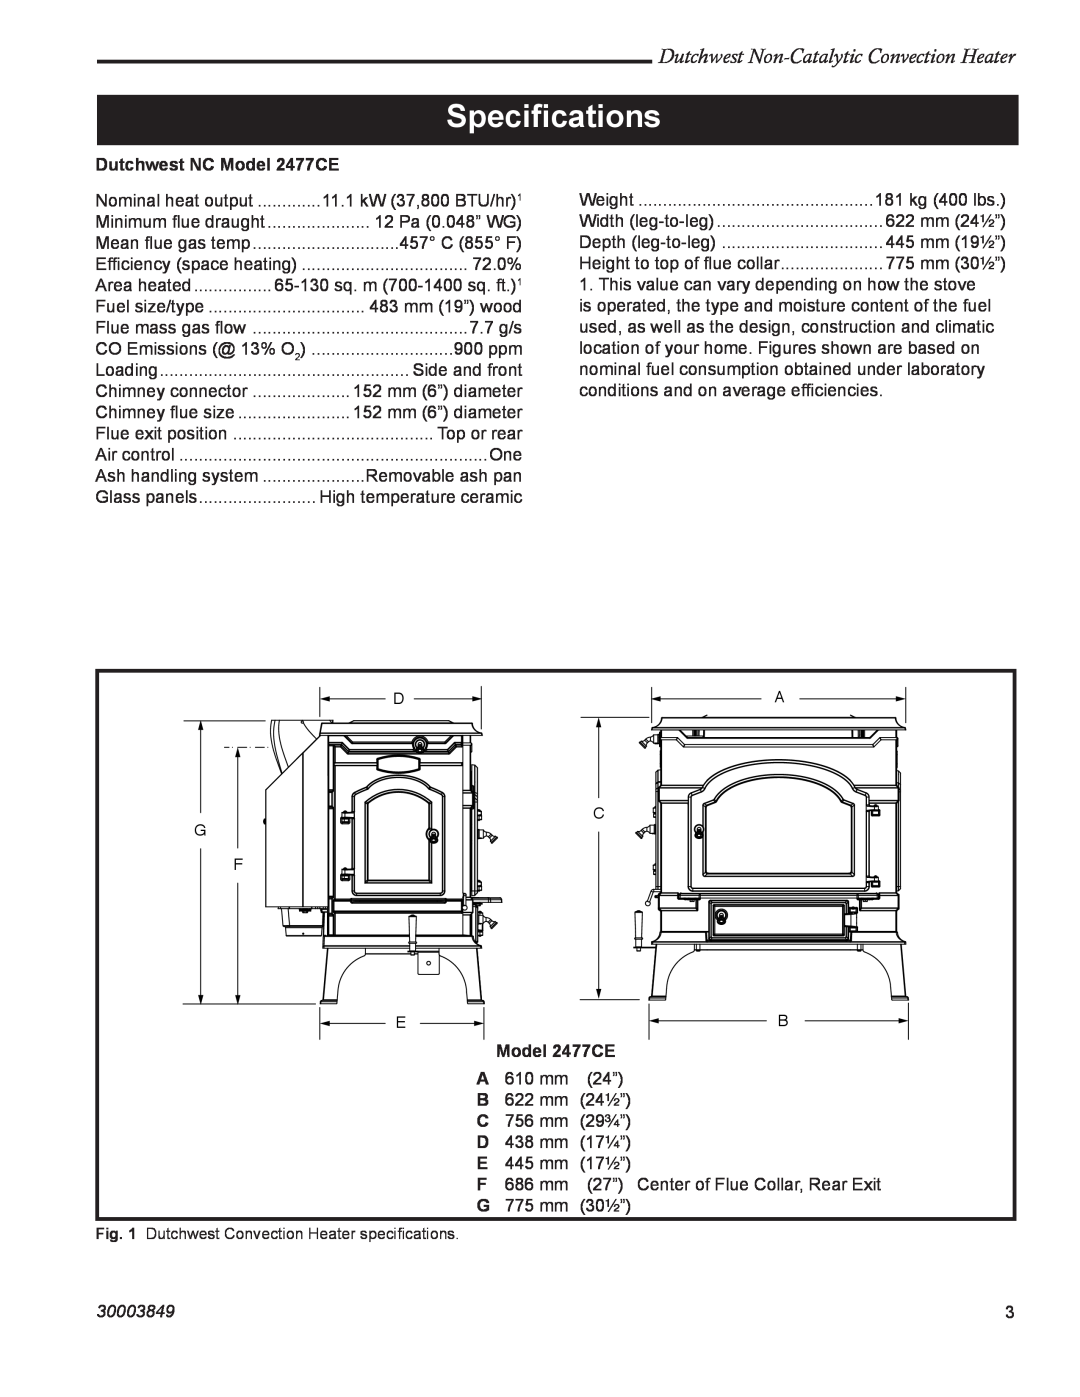 Vermont Casting manual Speciﬁcations, Dutchwest Non-CatalyticConvection Heater, Dutchwest NC Model 2477CE, 30003849 